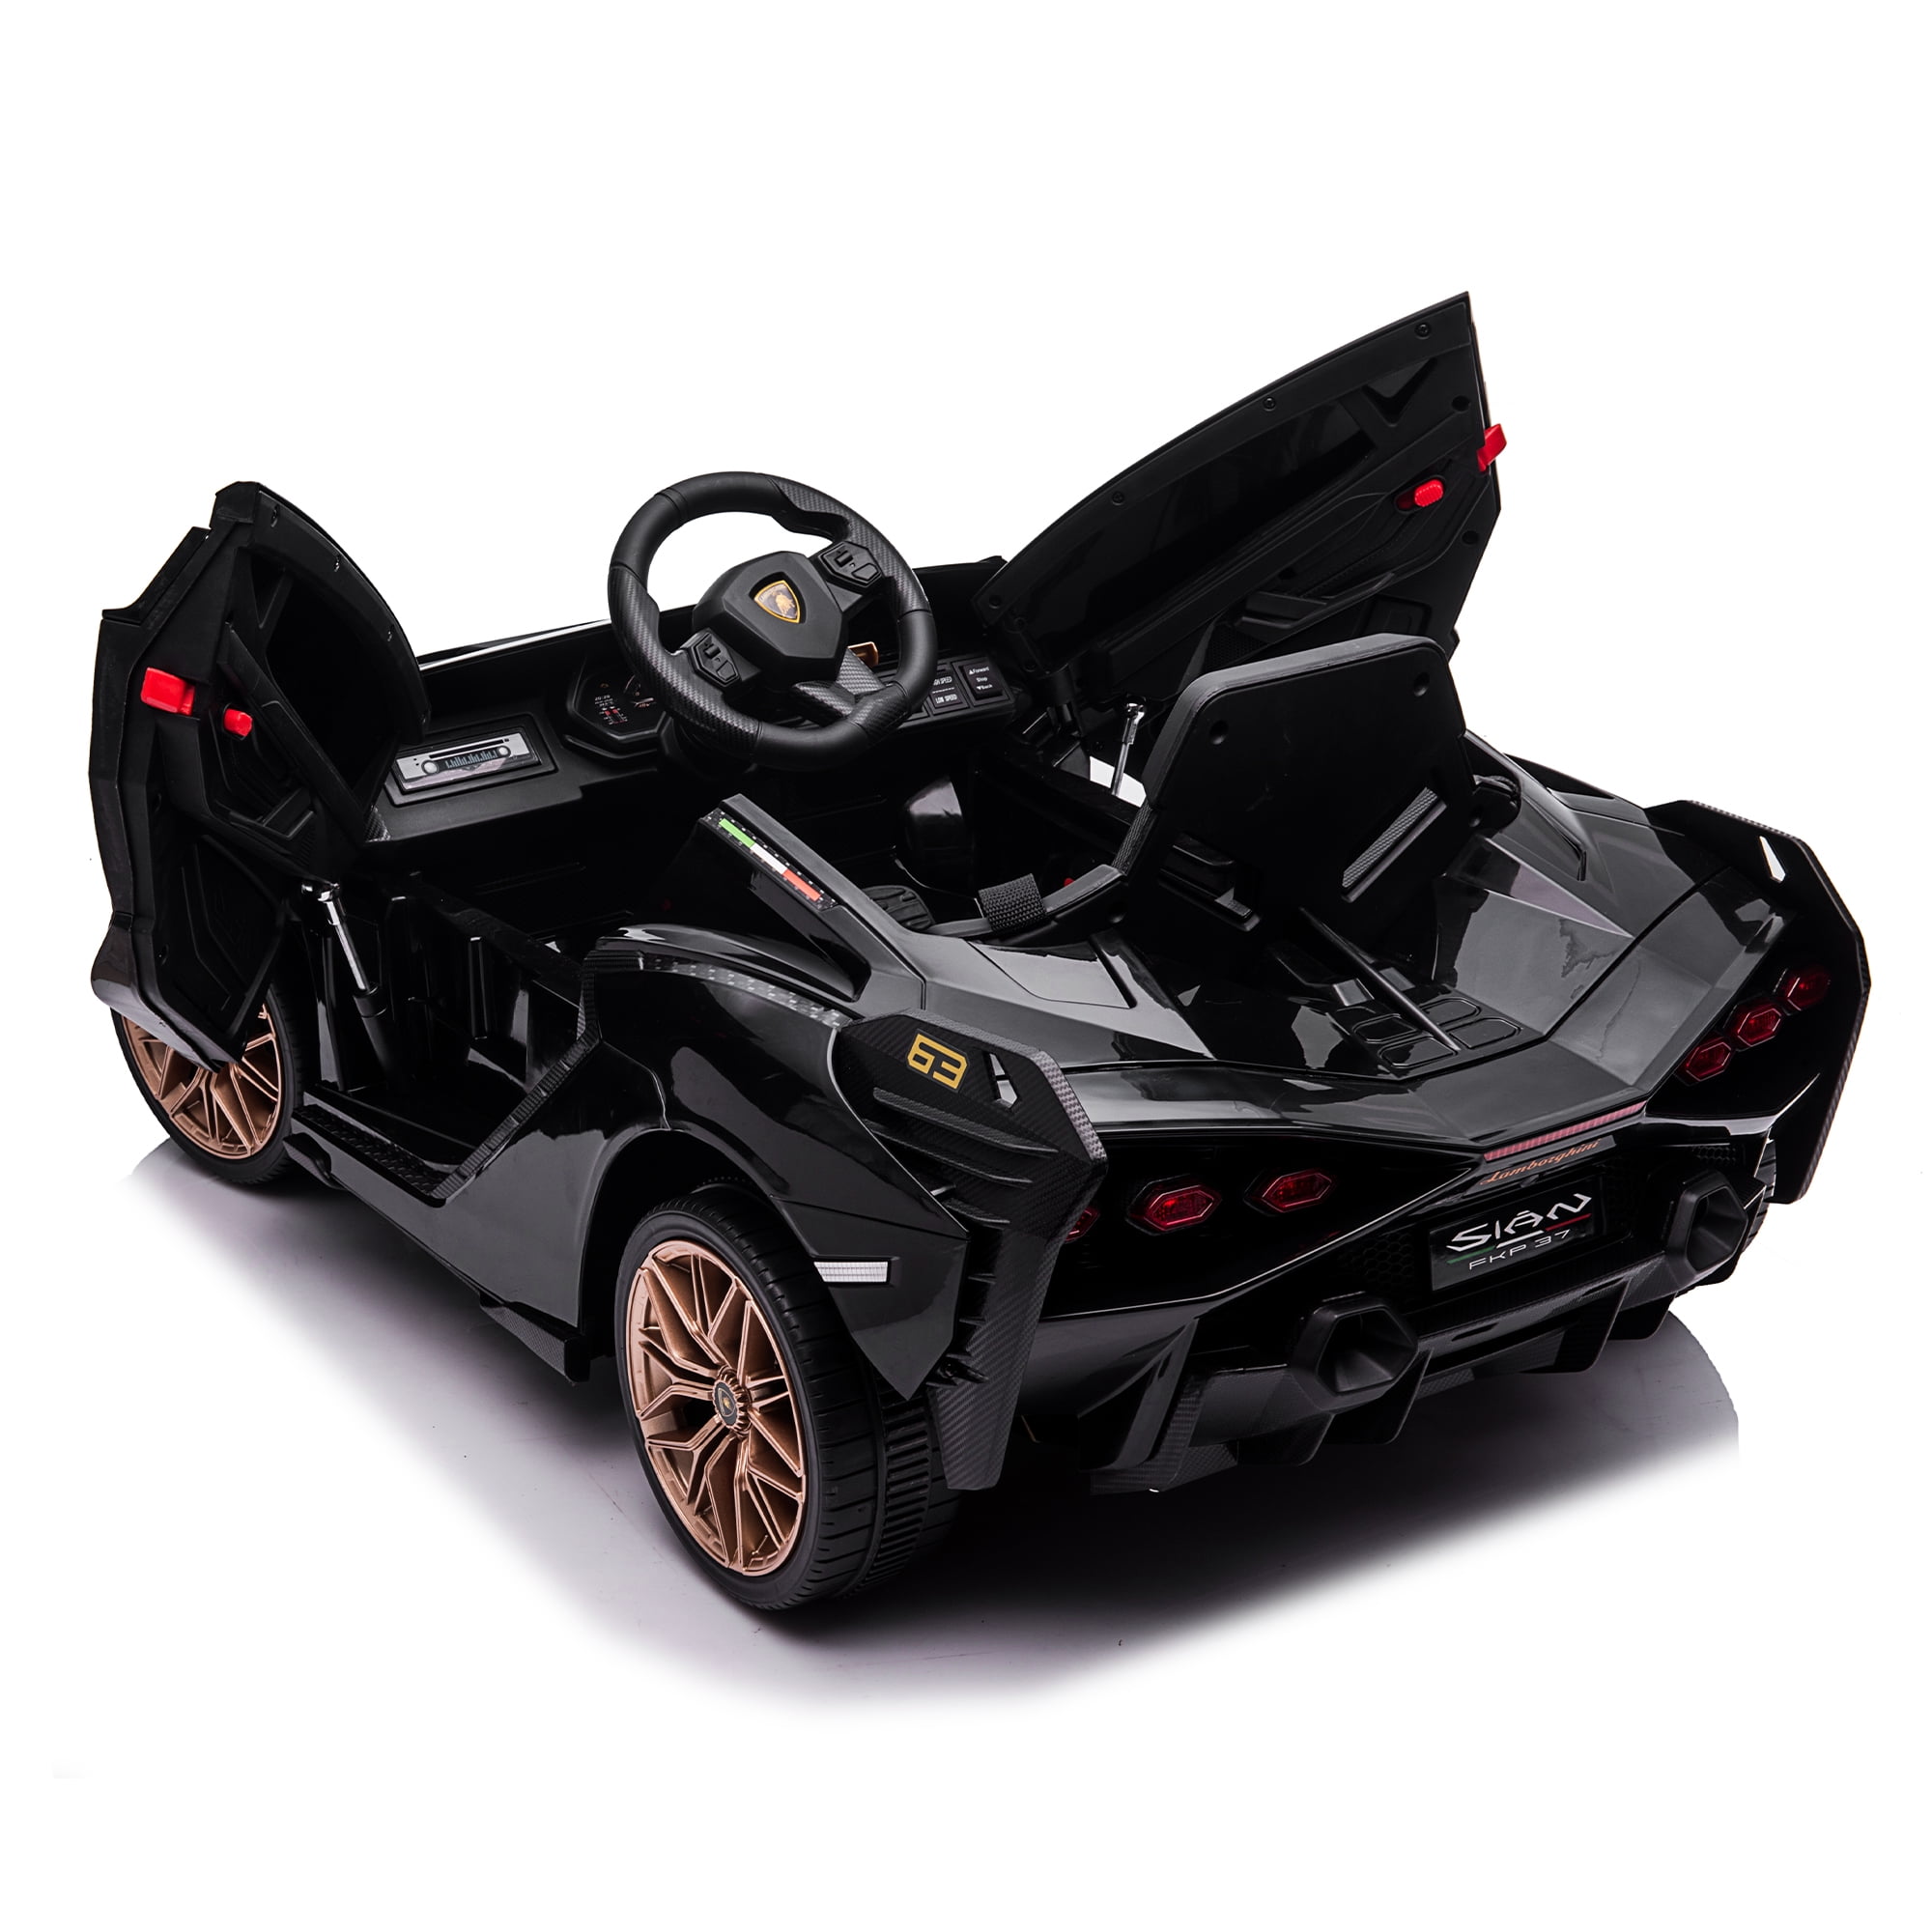 Electric 12V Kids Ride On Toy Car Lamborghini Licensed Children Gift Black 